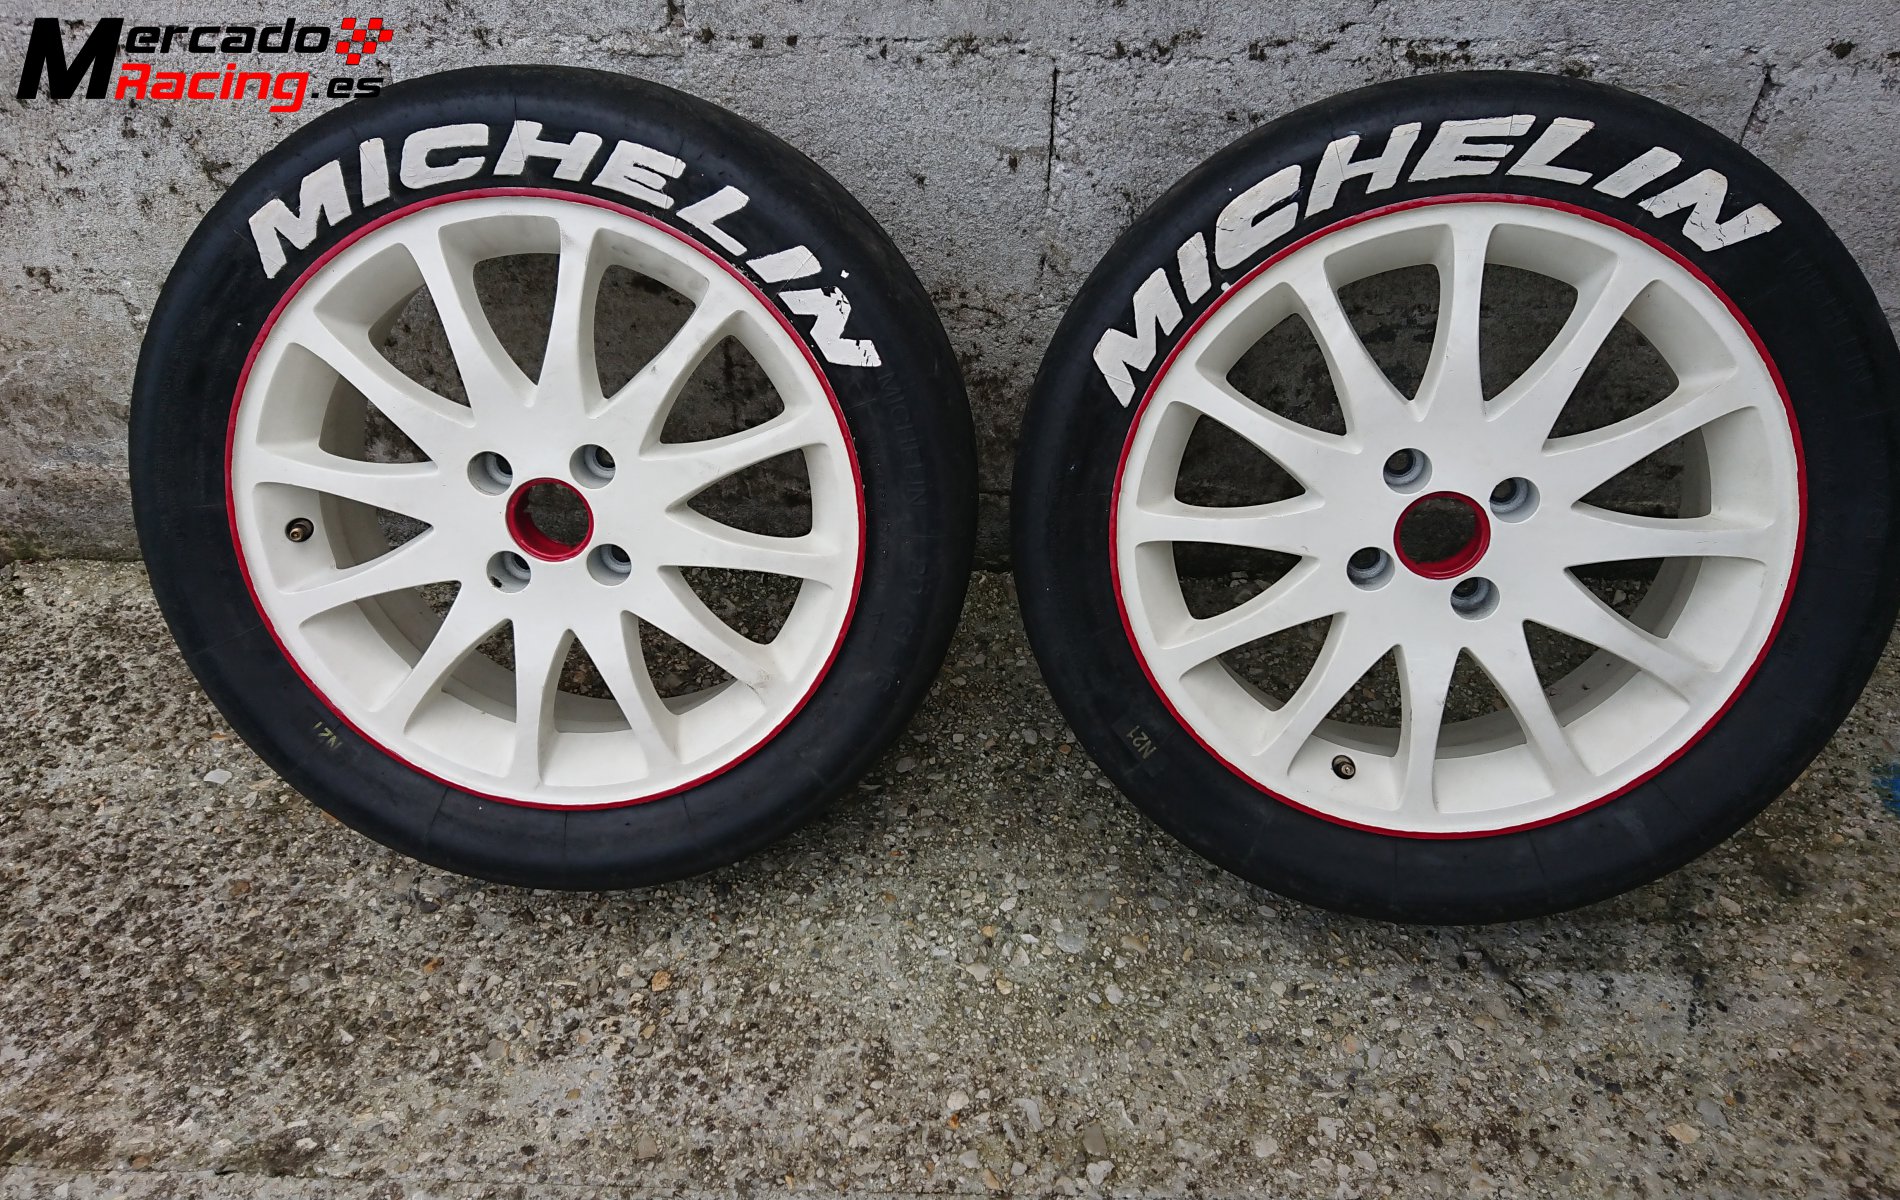 Michelin n21